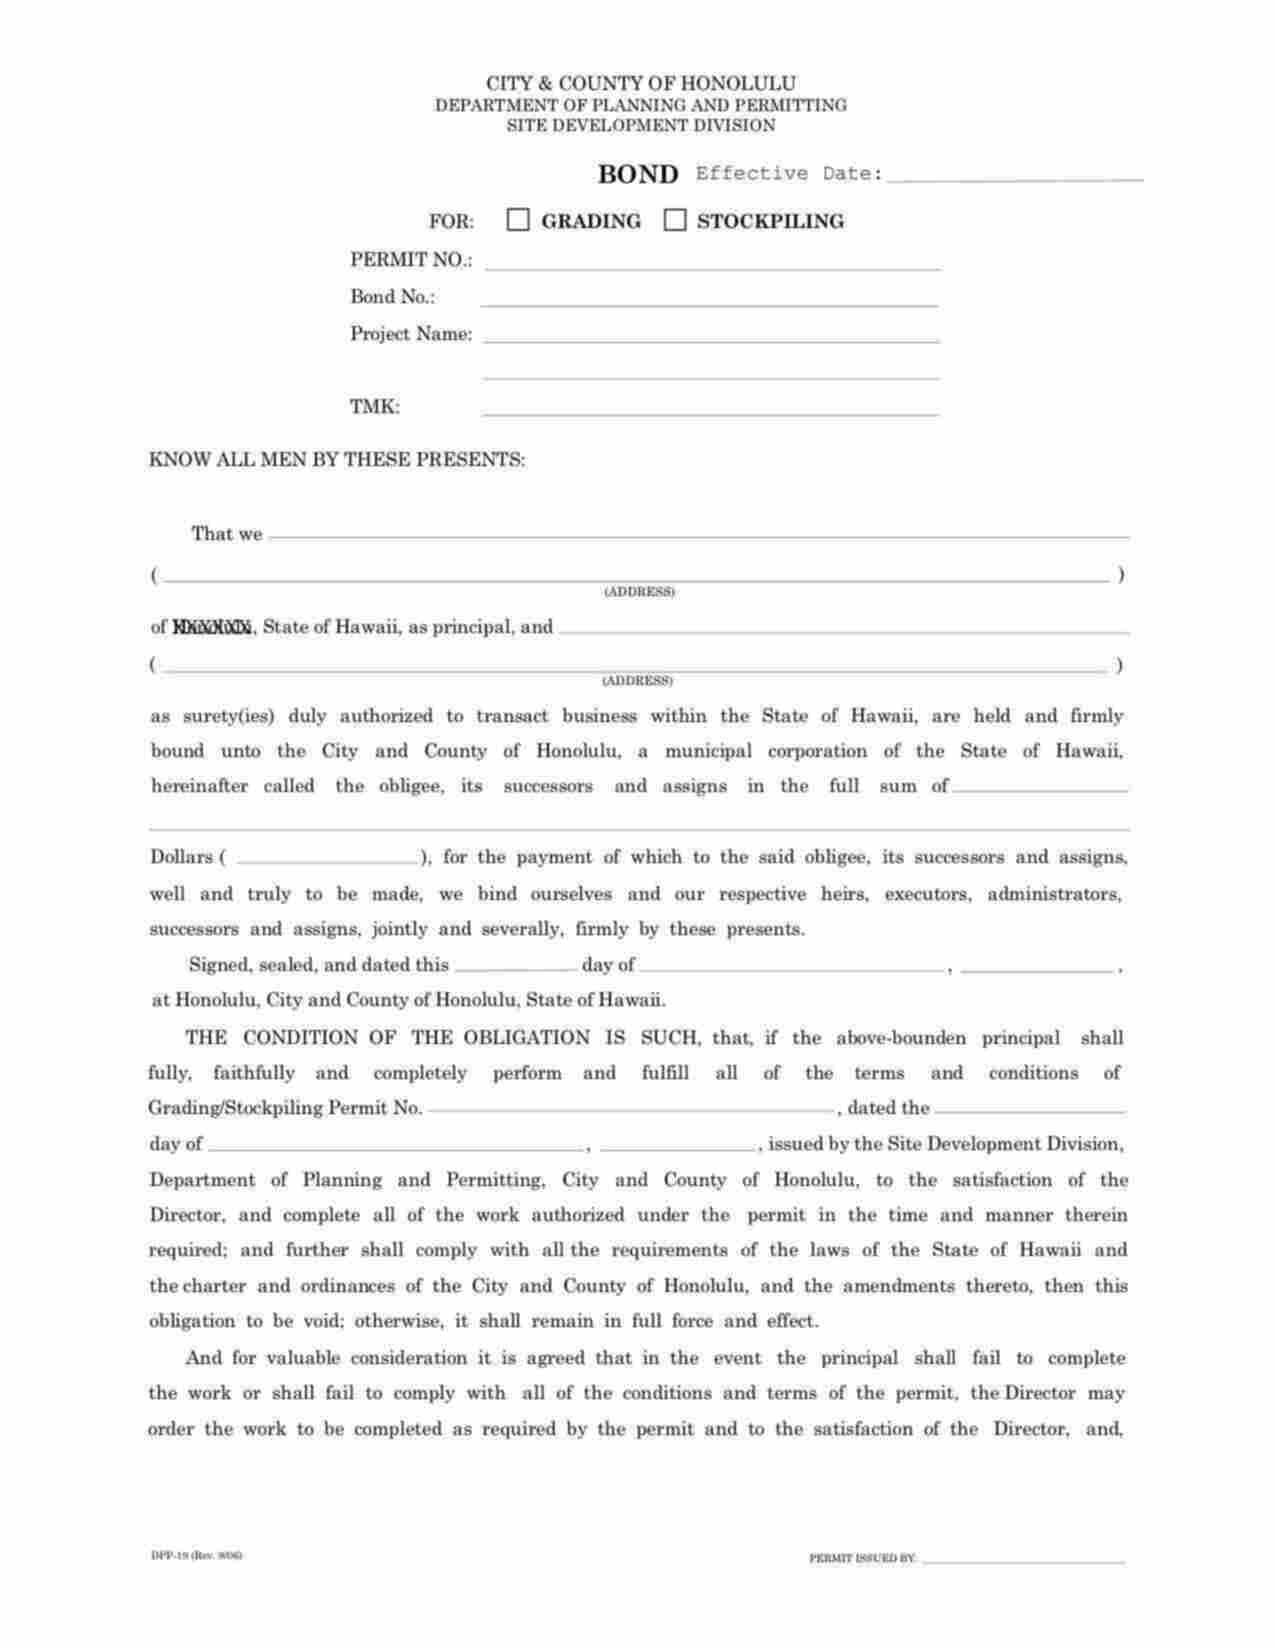 Hawaii Grading Permit Bond Form